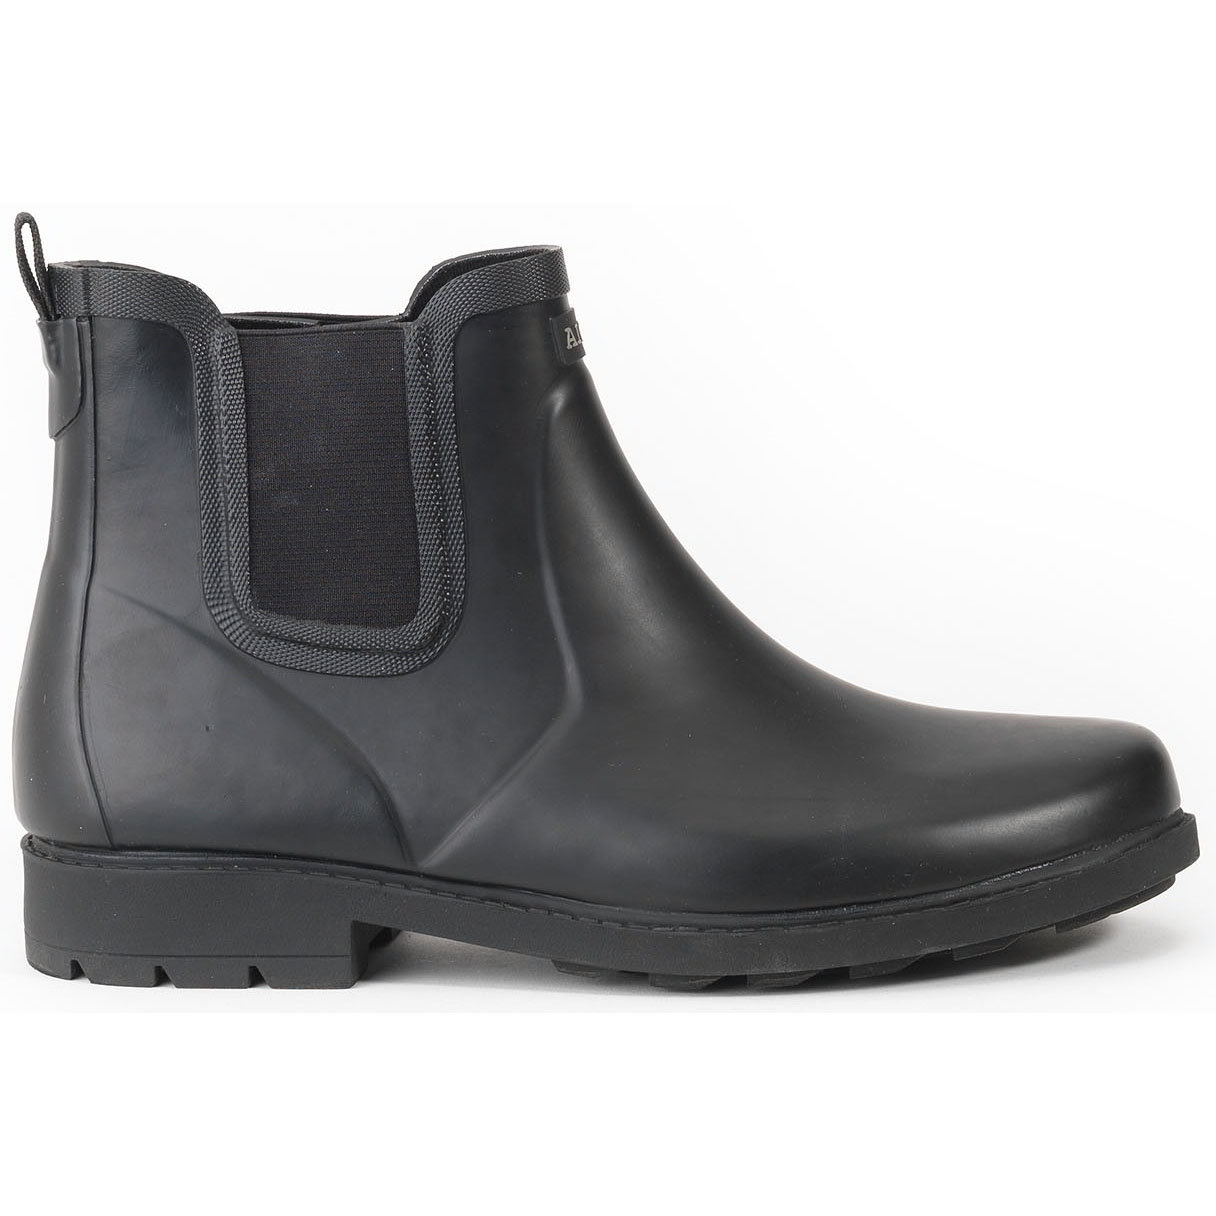 Aigle Mens Carville Wellies Ankle Rain Boots - UK 11.5 Black 2951